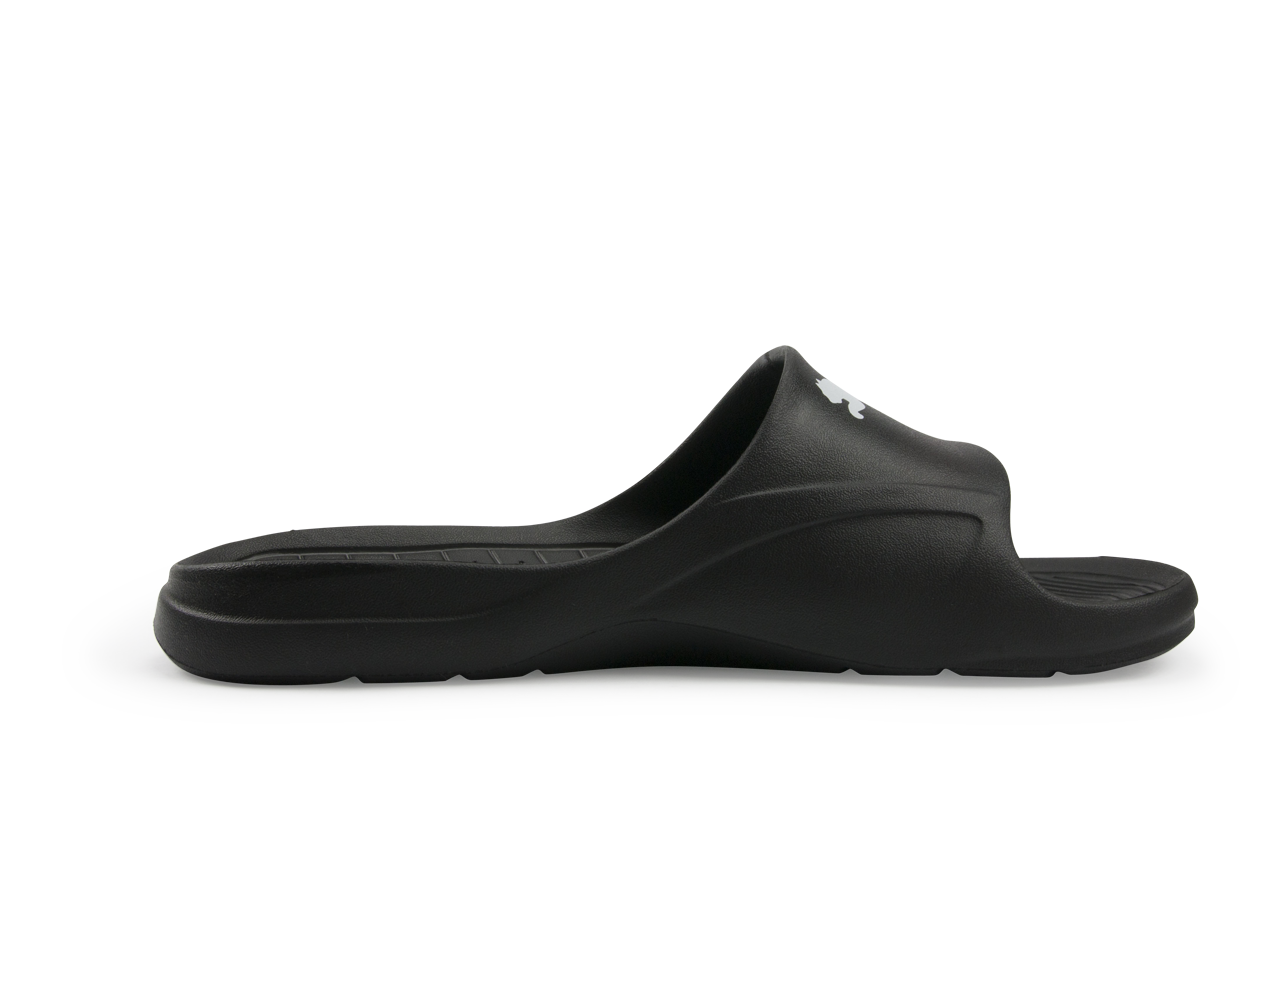 PUMA Men's DiveCat Sandals Black/White